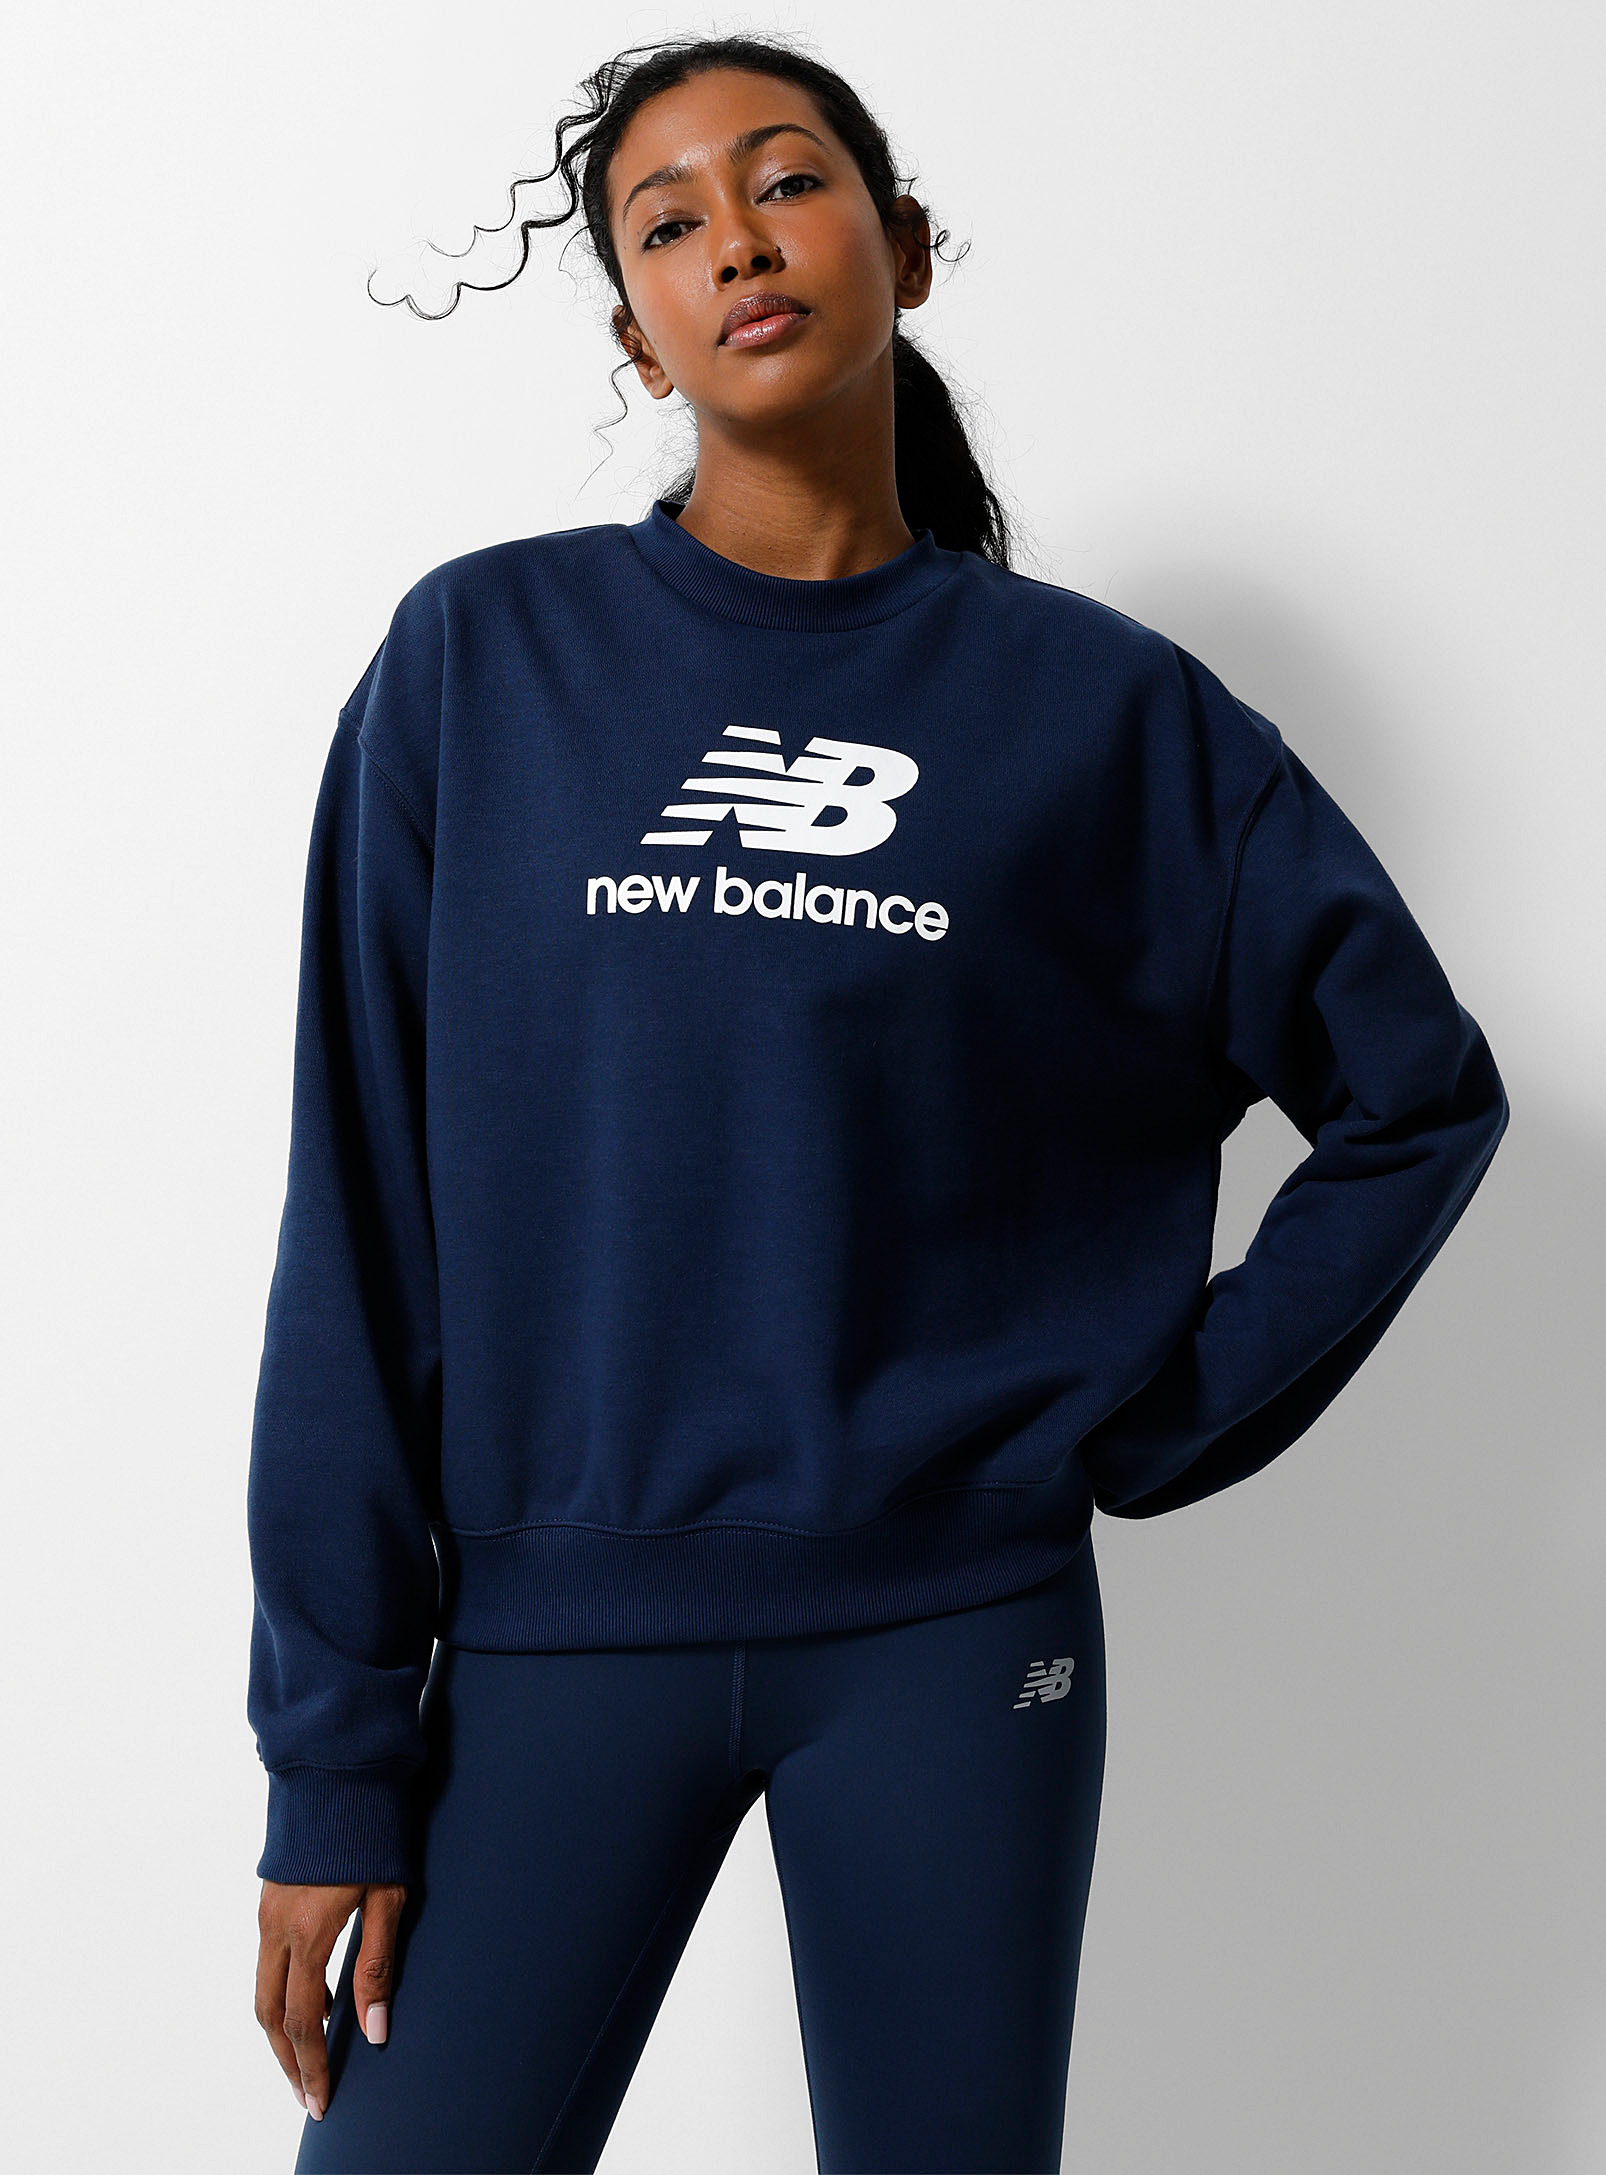 New Balance - Women's Signature crew-neck sweatshirt